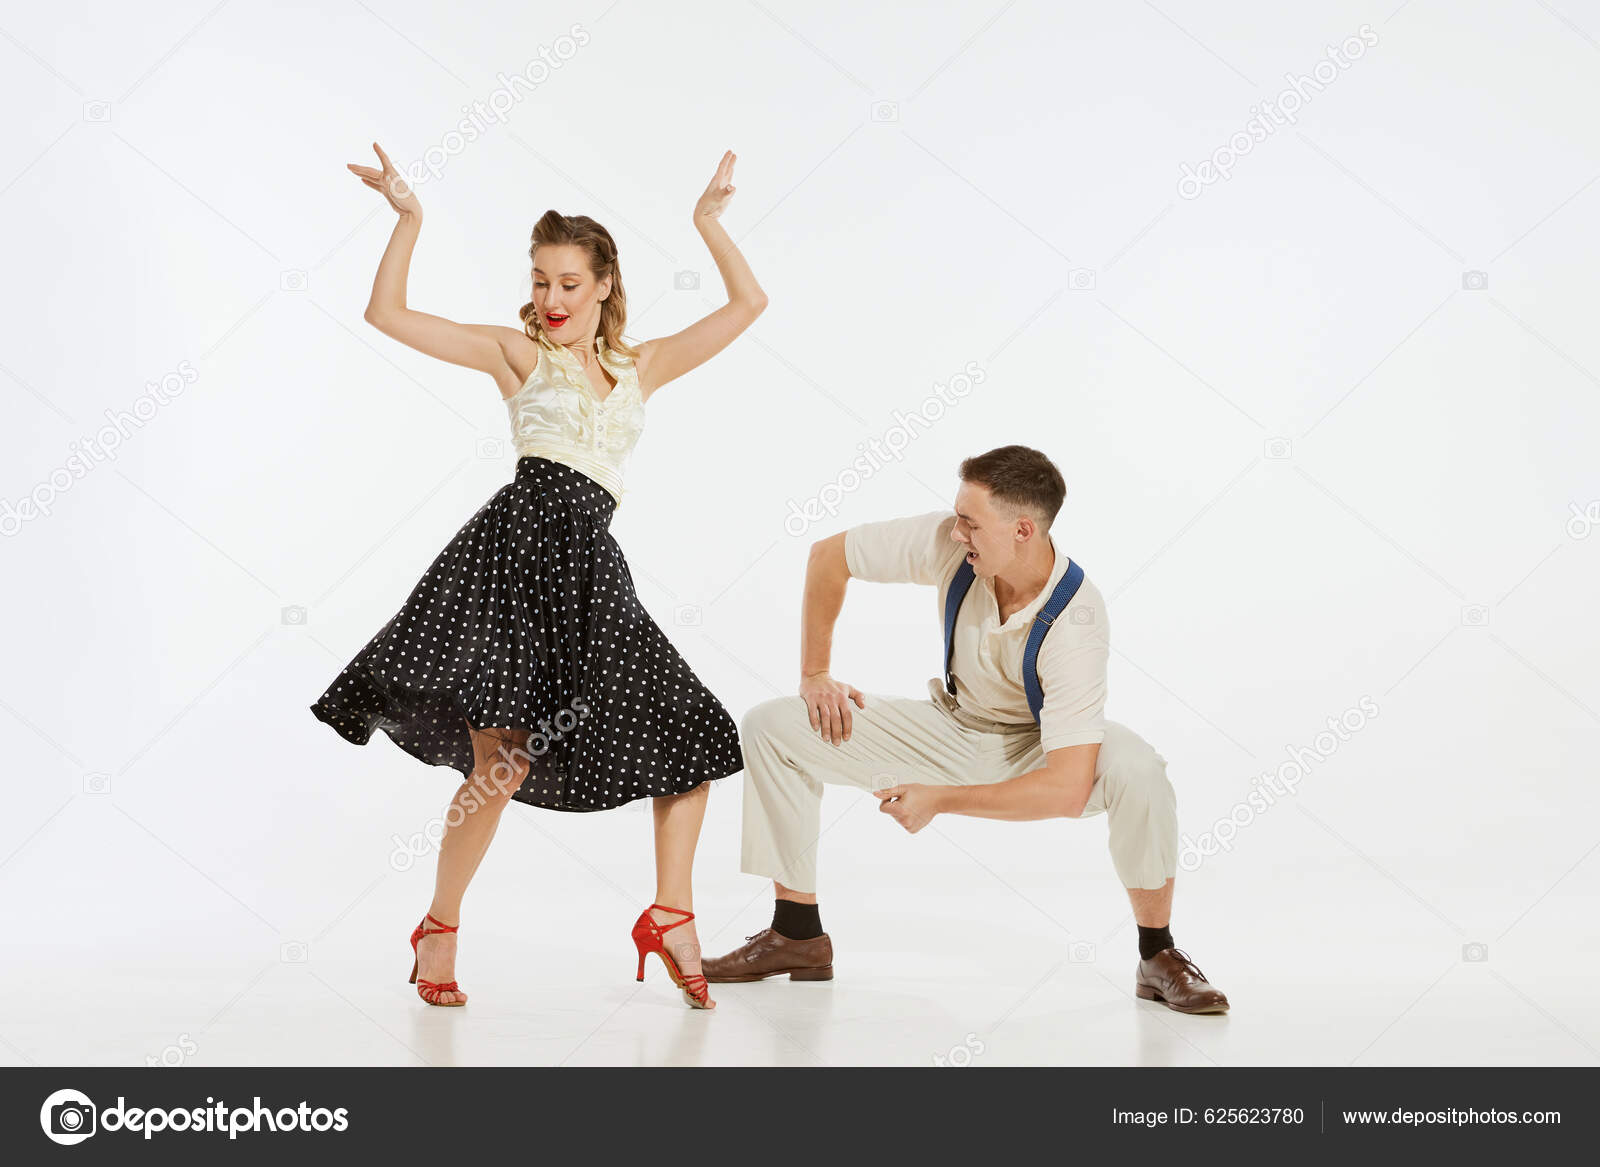 Swing Dance Fashion